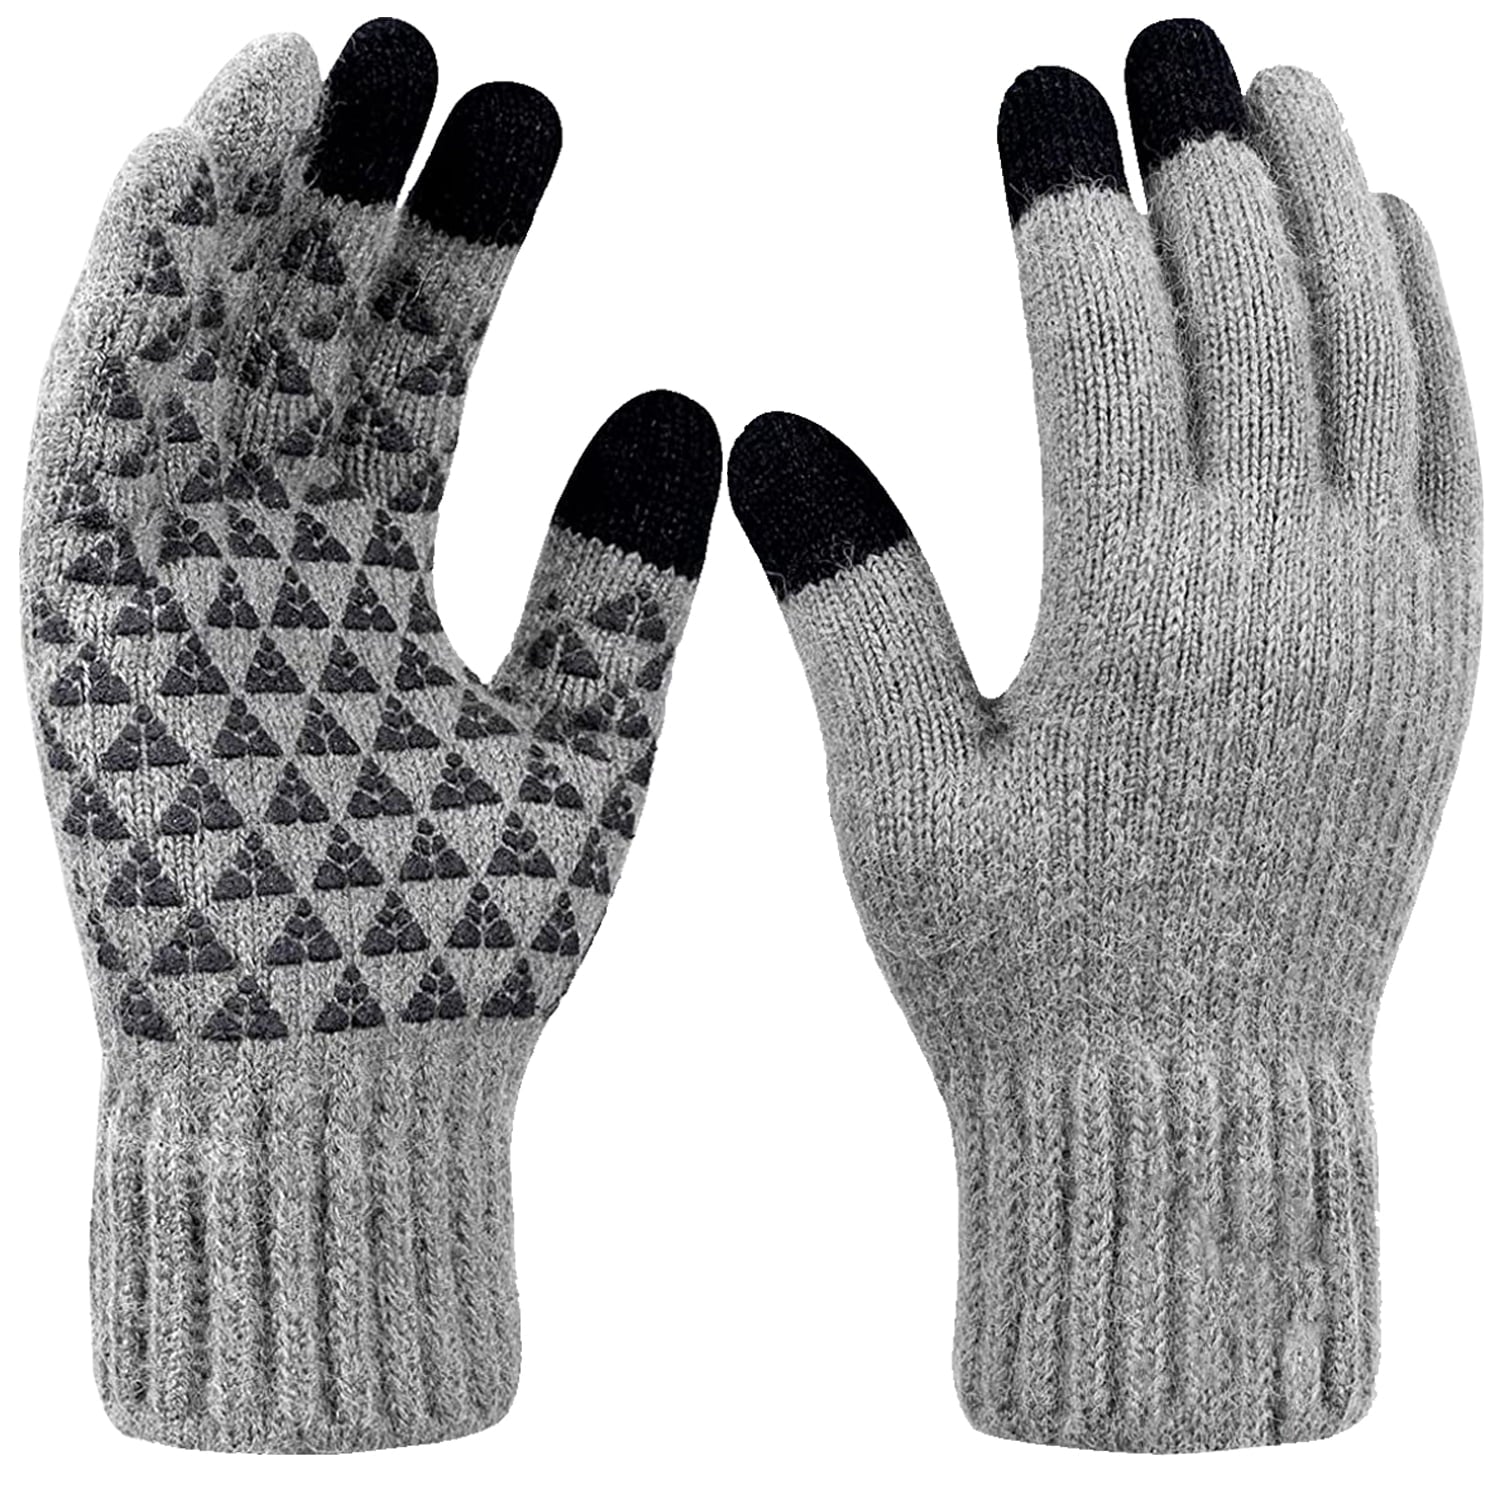 Irene Winter Gloves Men Women Touch Screen Glove Cold Weather Warm Gloves Workout Gloves Running Cycling Training Knit Gloves, Bluish Gray (Medium)